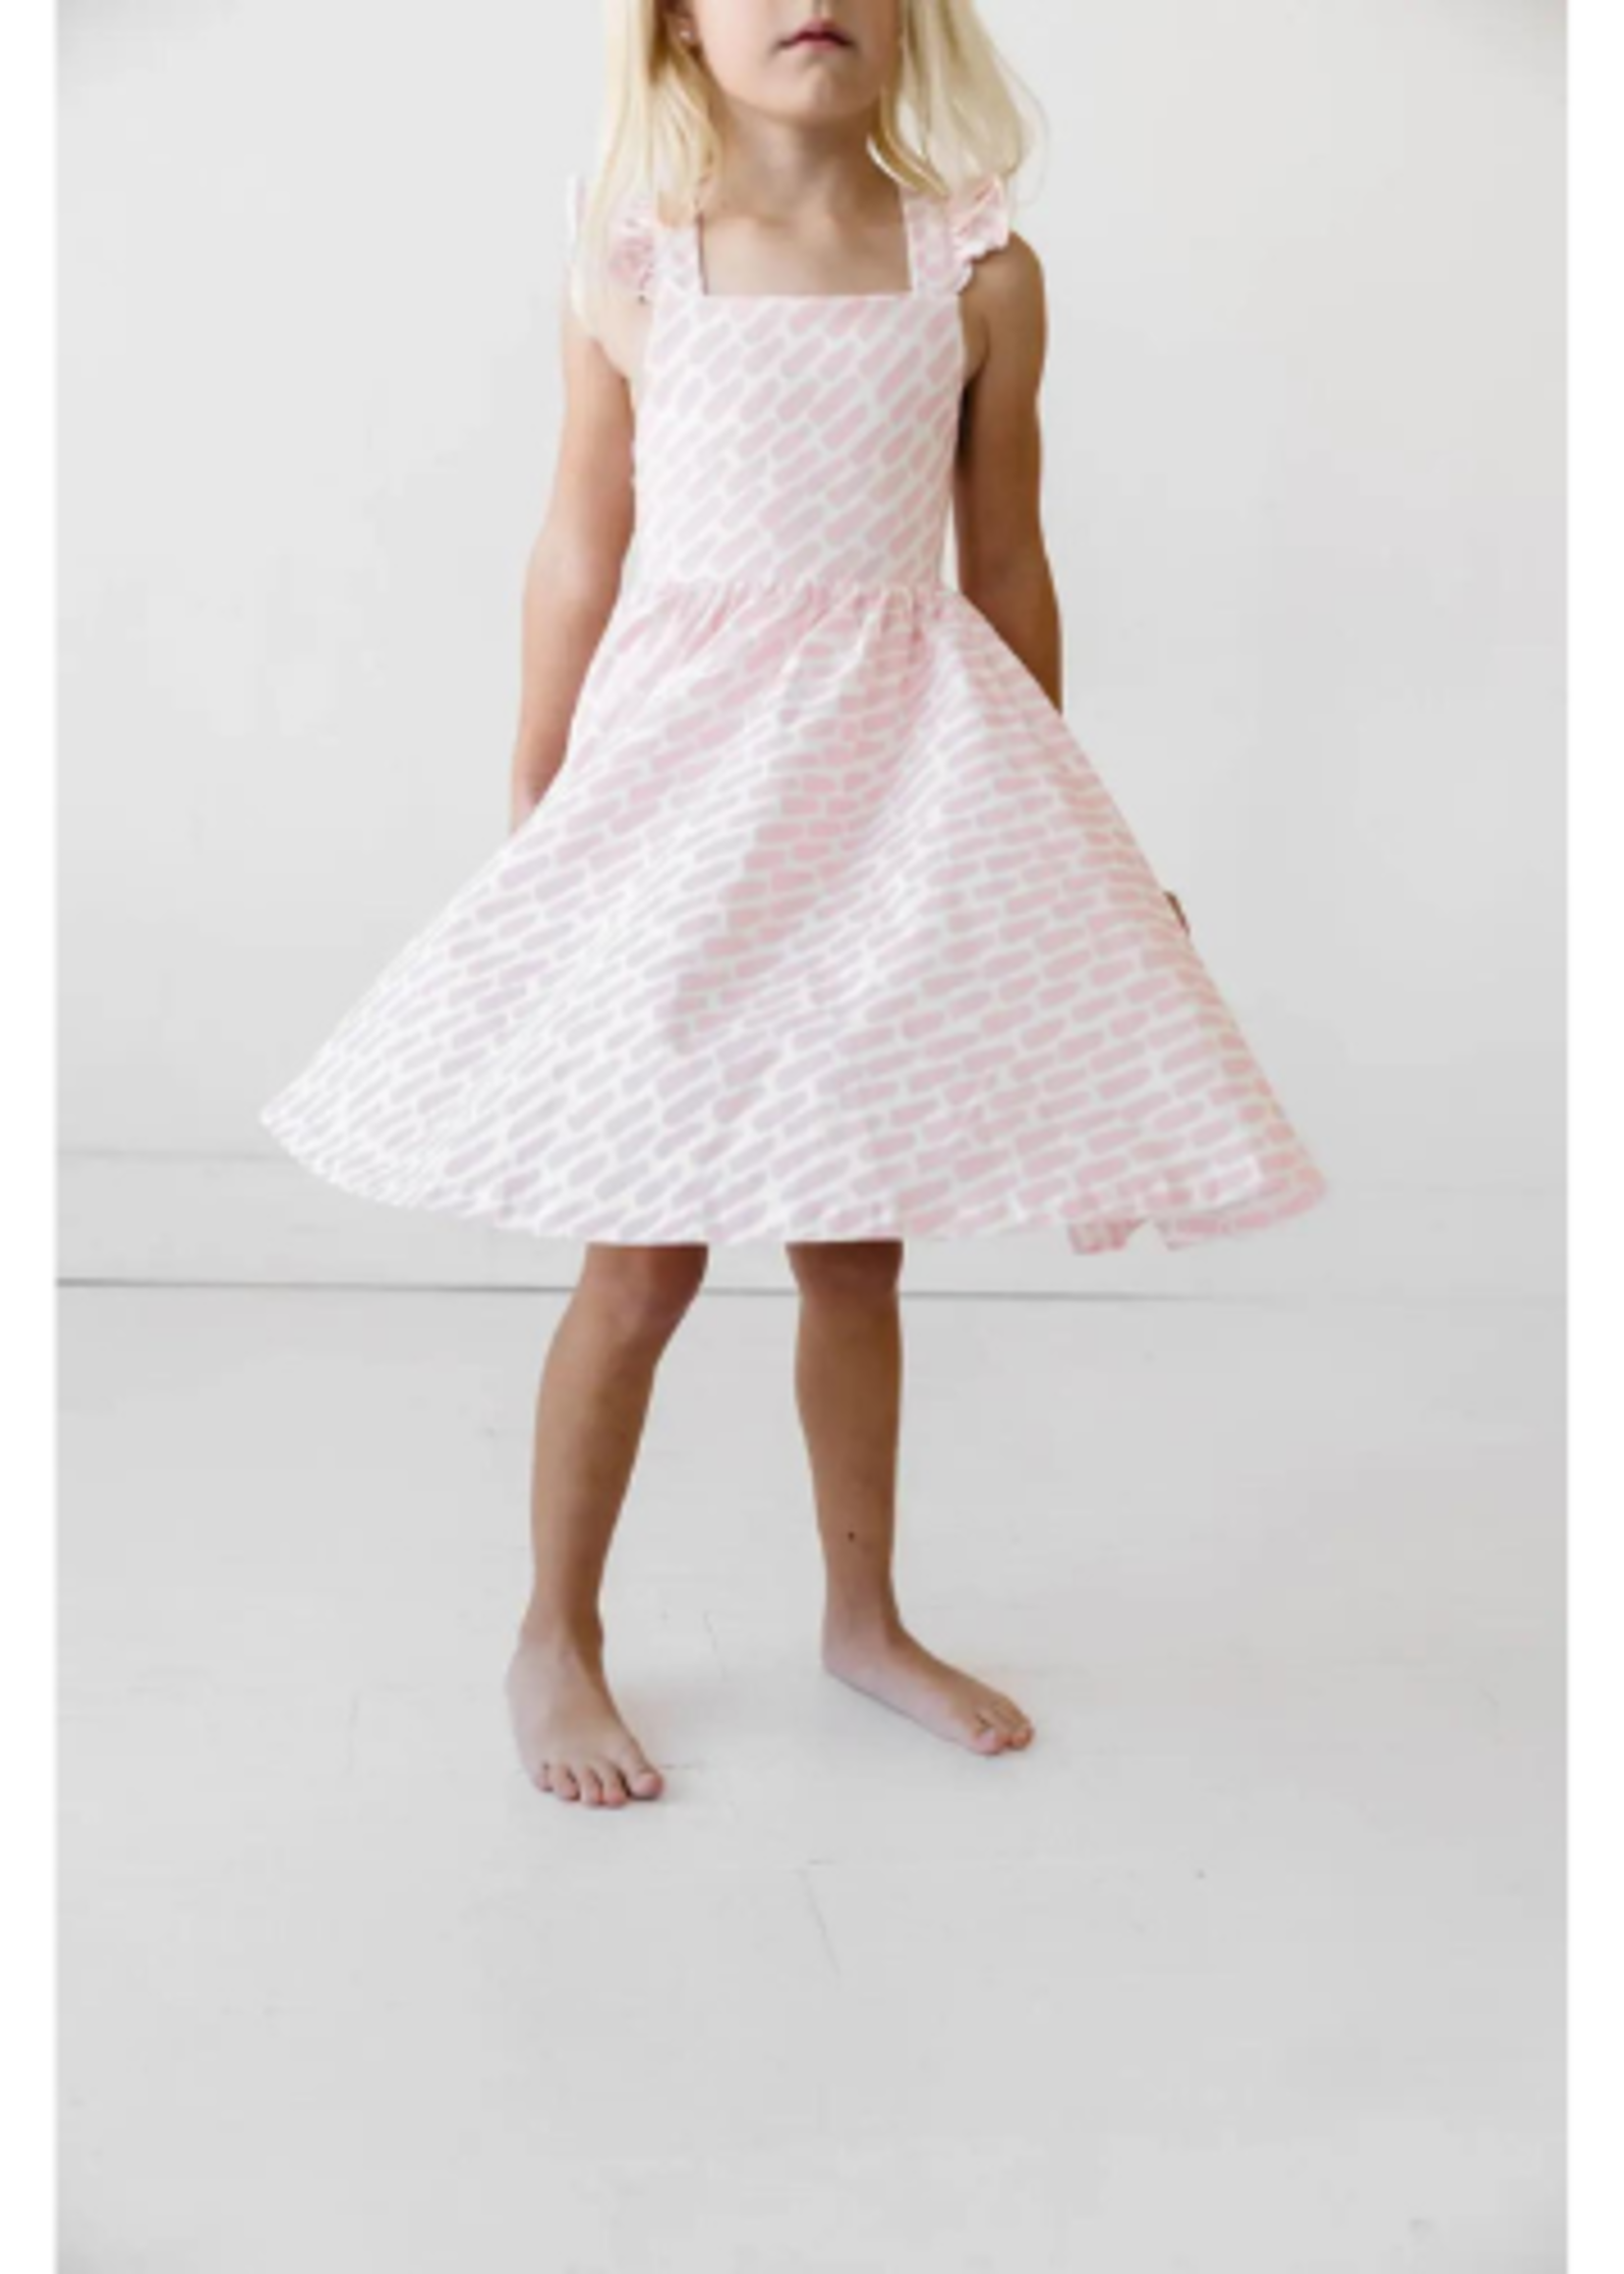 Ollie Jay Rosita Pink Dress